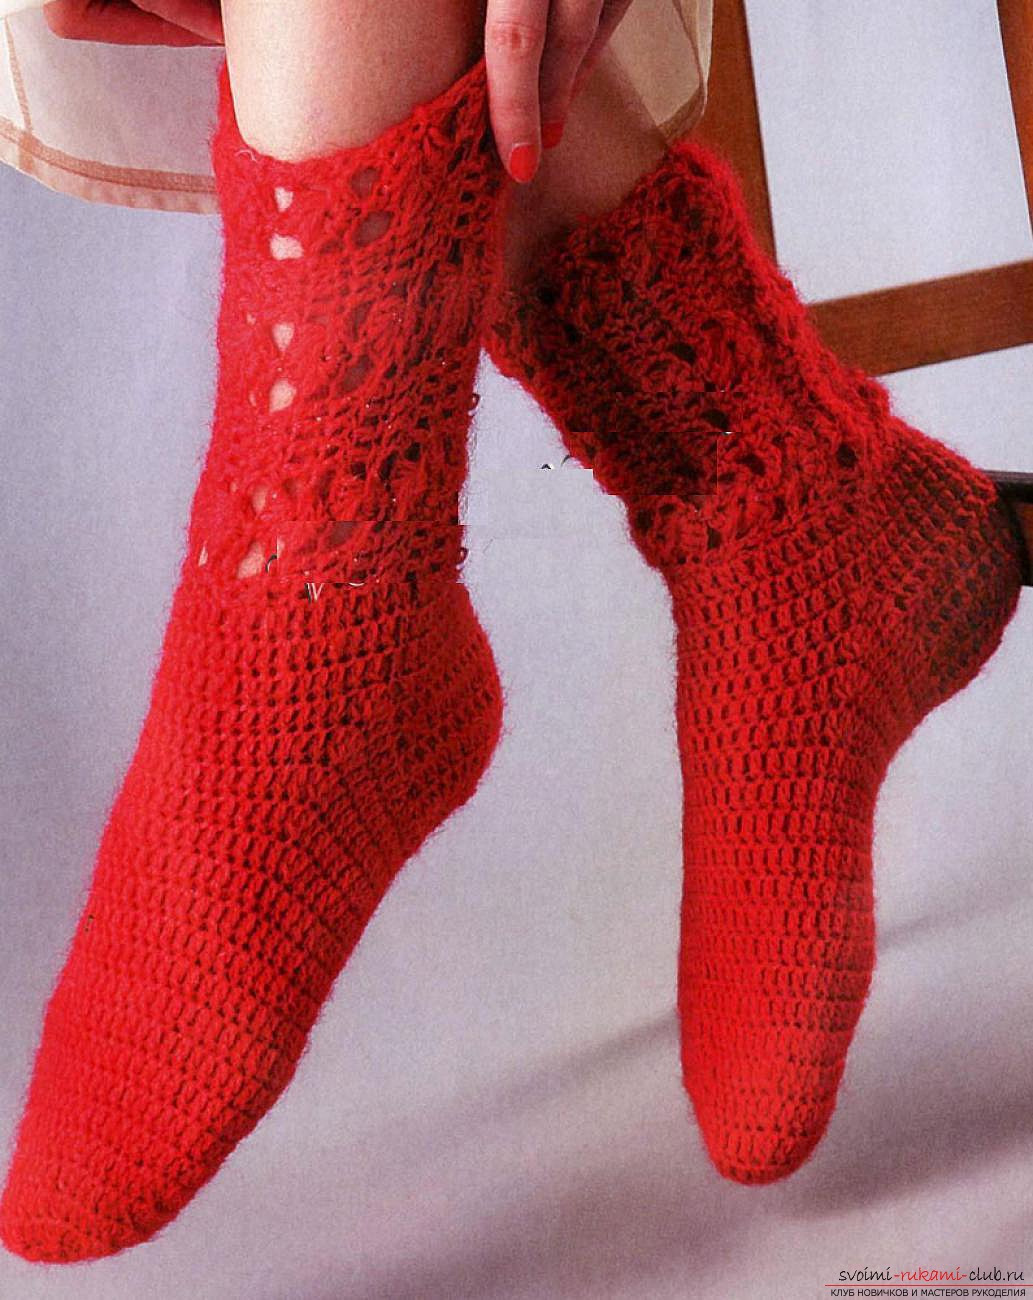 crocheted charming socks. Photo №5